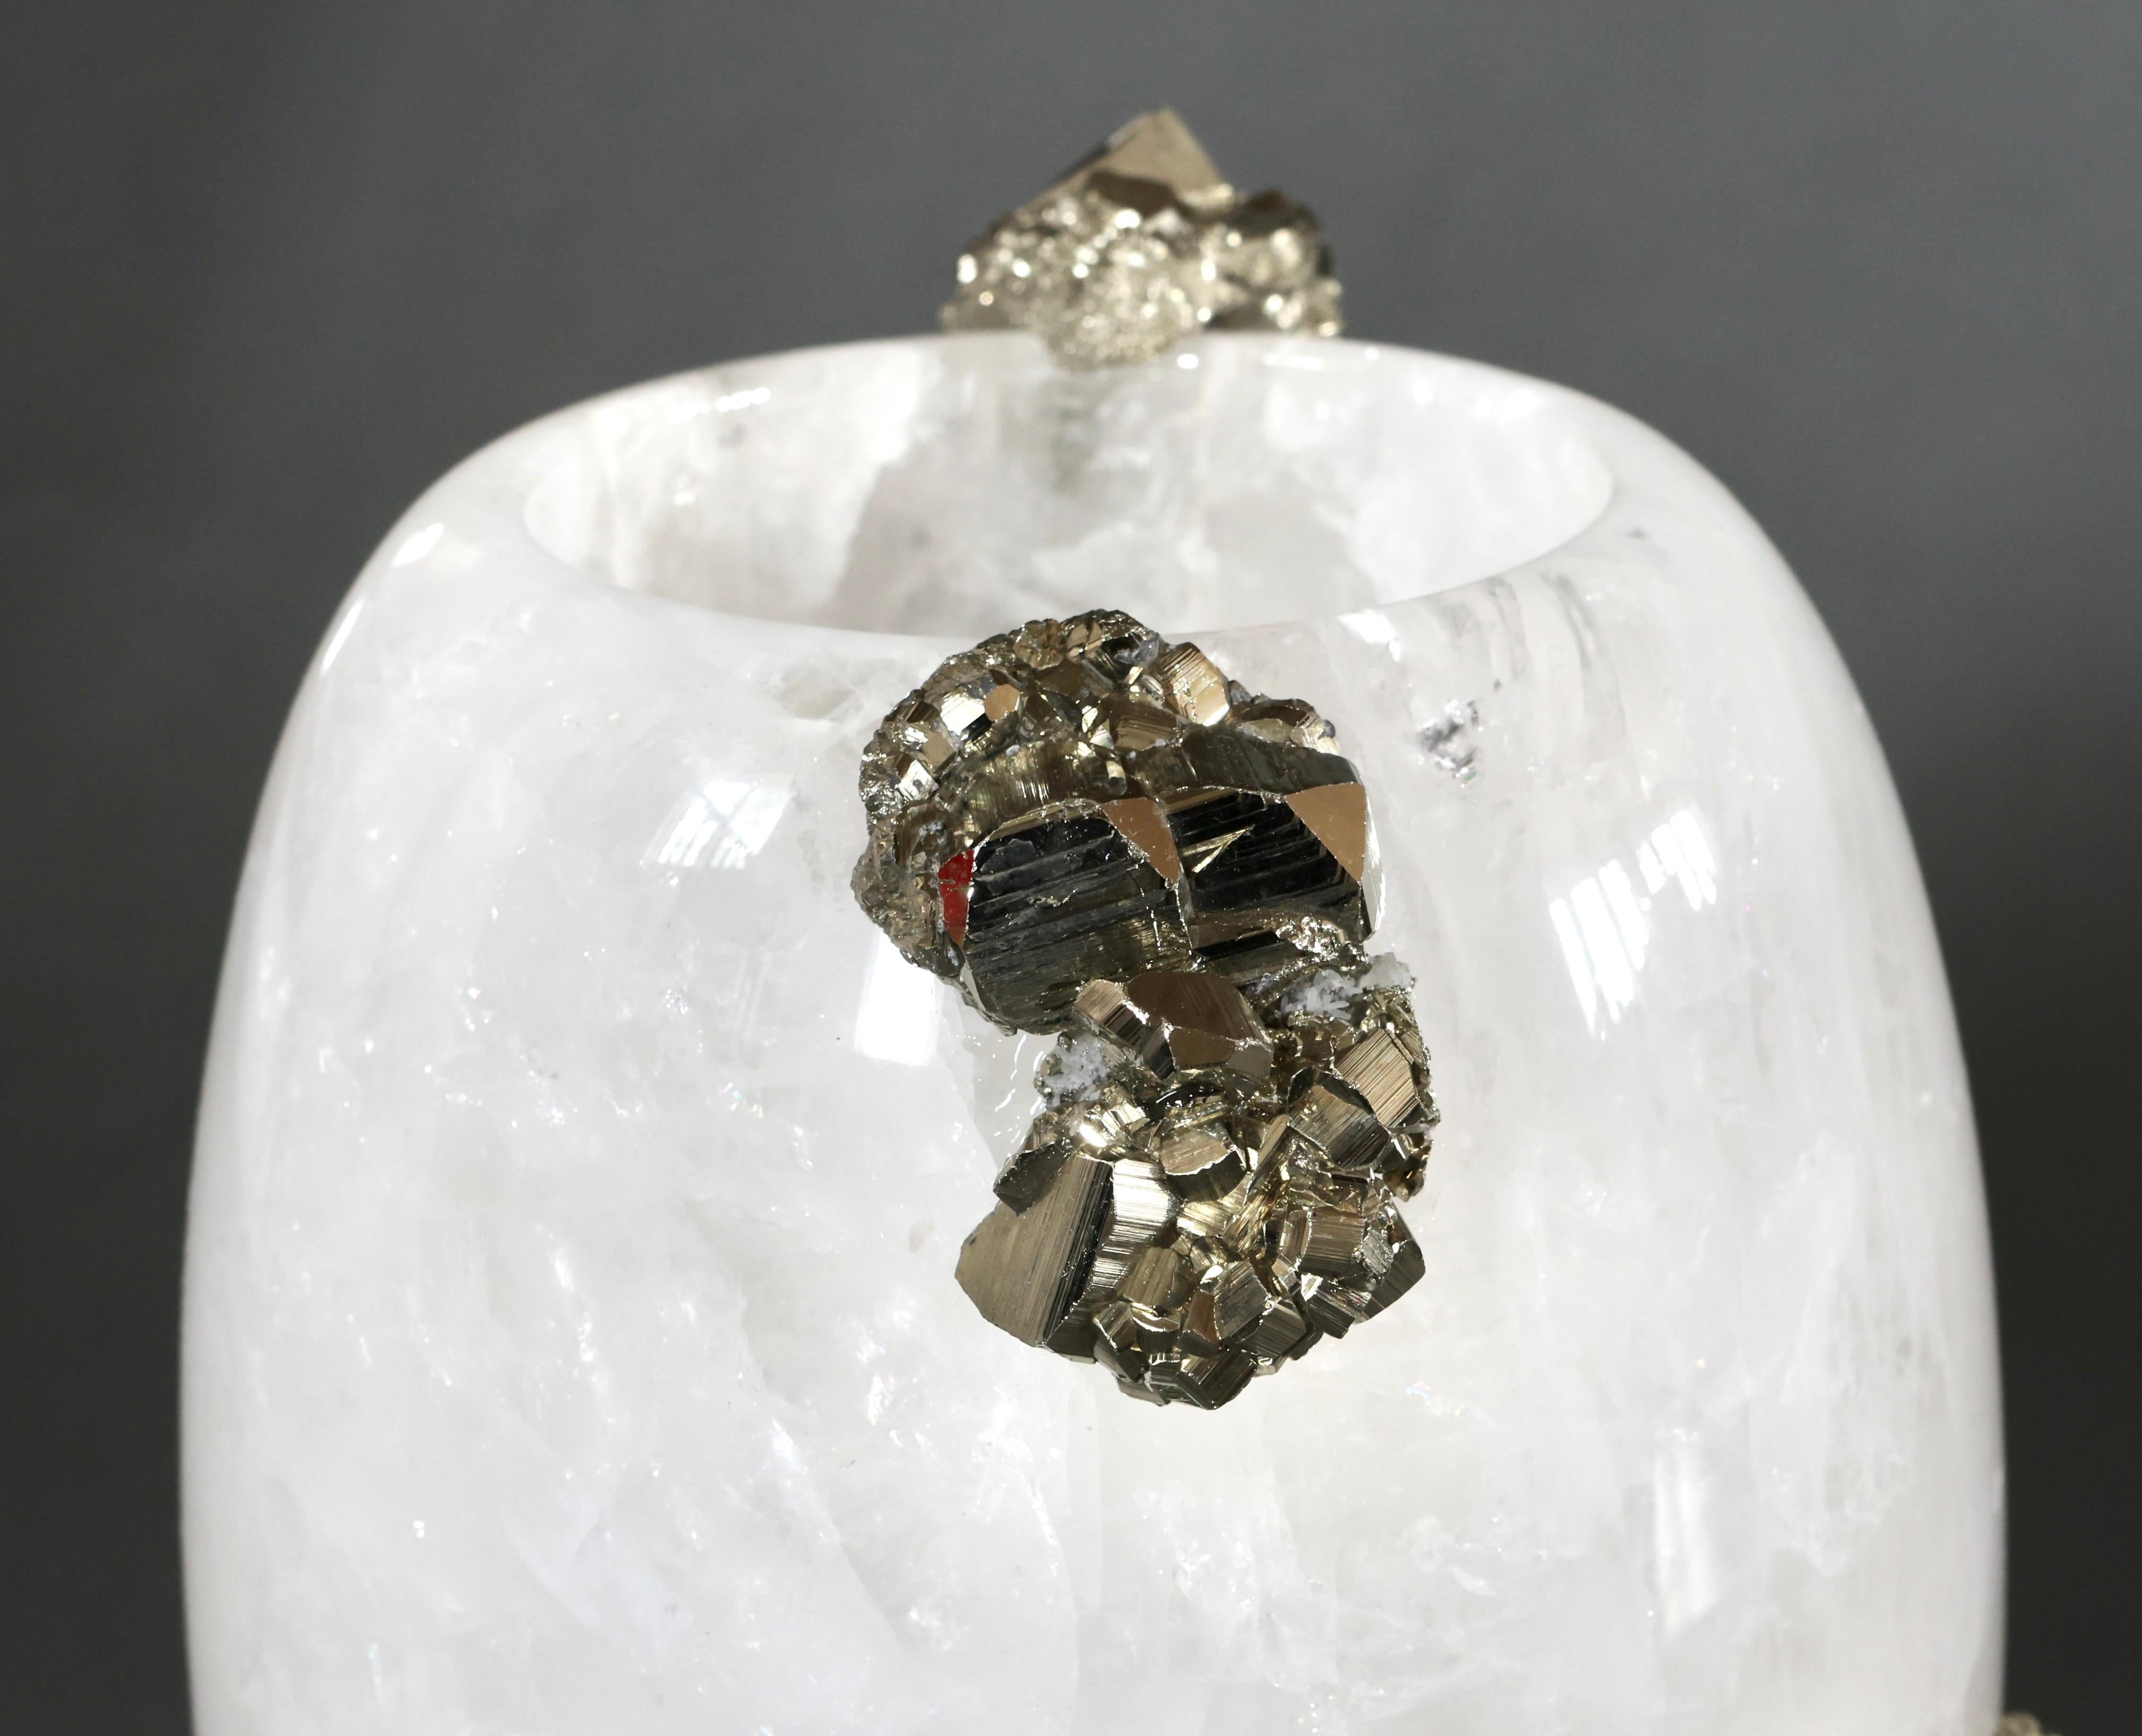 Rock crystal vase with gem stone decoration.
    